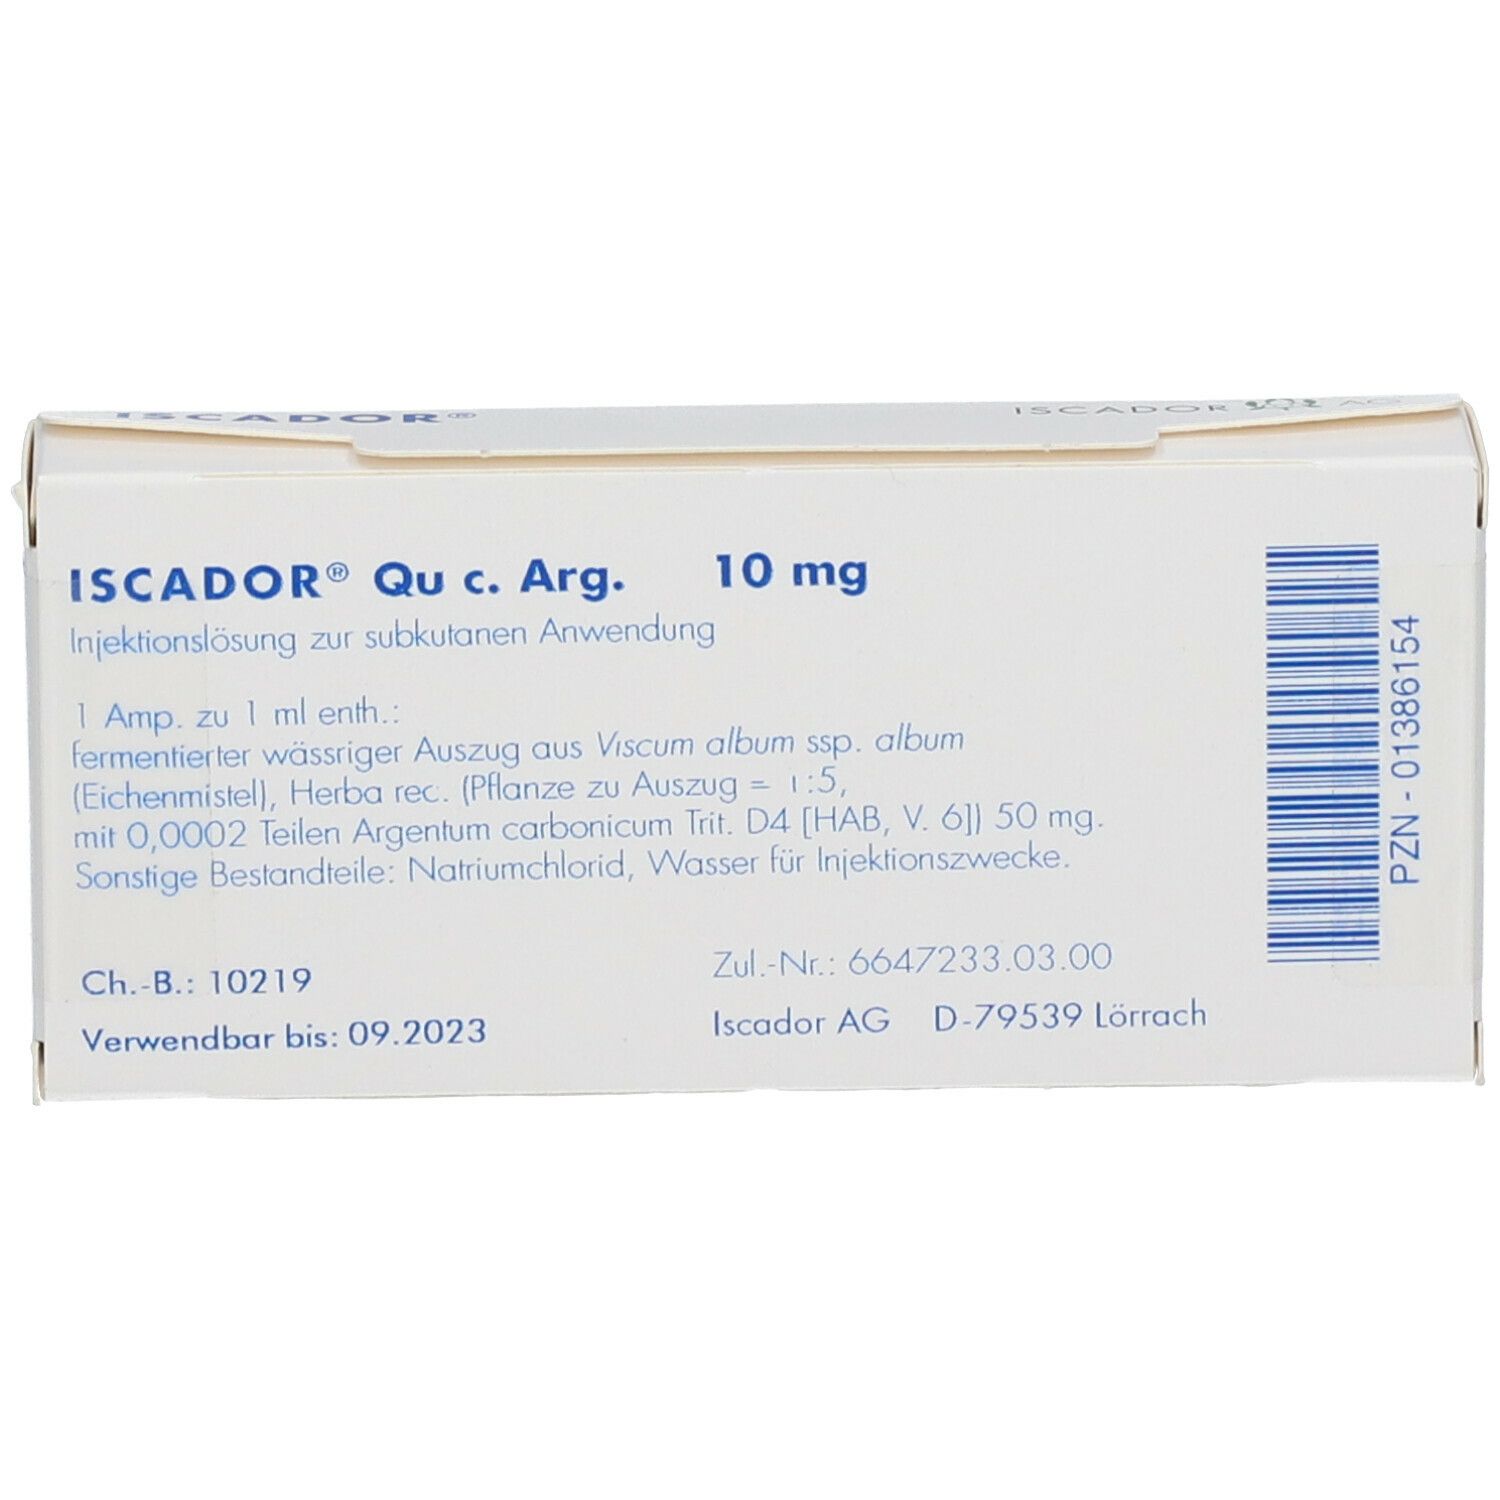 ISCADOR® Qu c. Arg. 10 mg